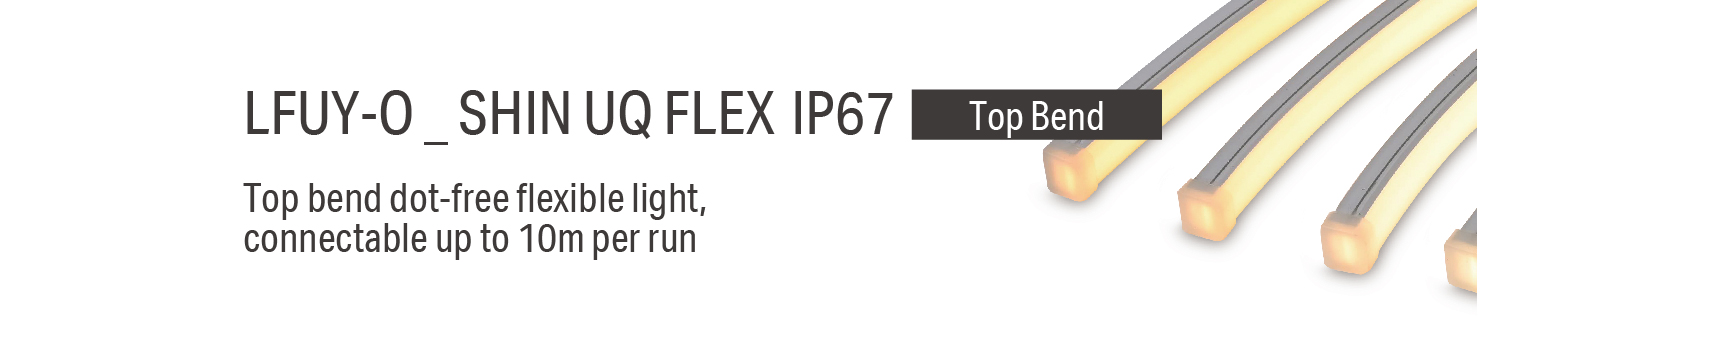 LFUY-O _ SHIN UQ FLEX IP67 Top bend dot-free flexible light, connectable up to 10m per run